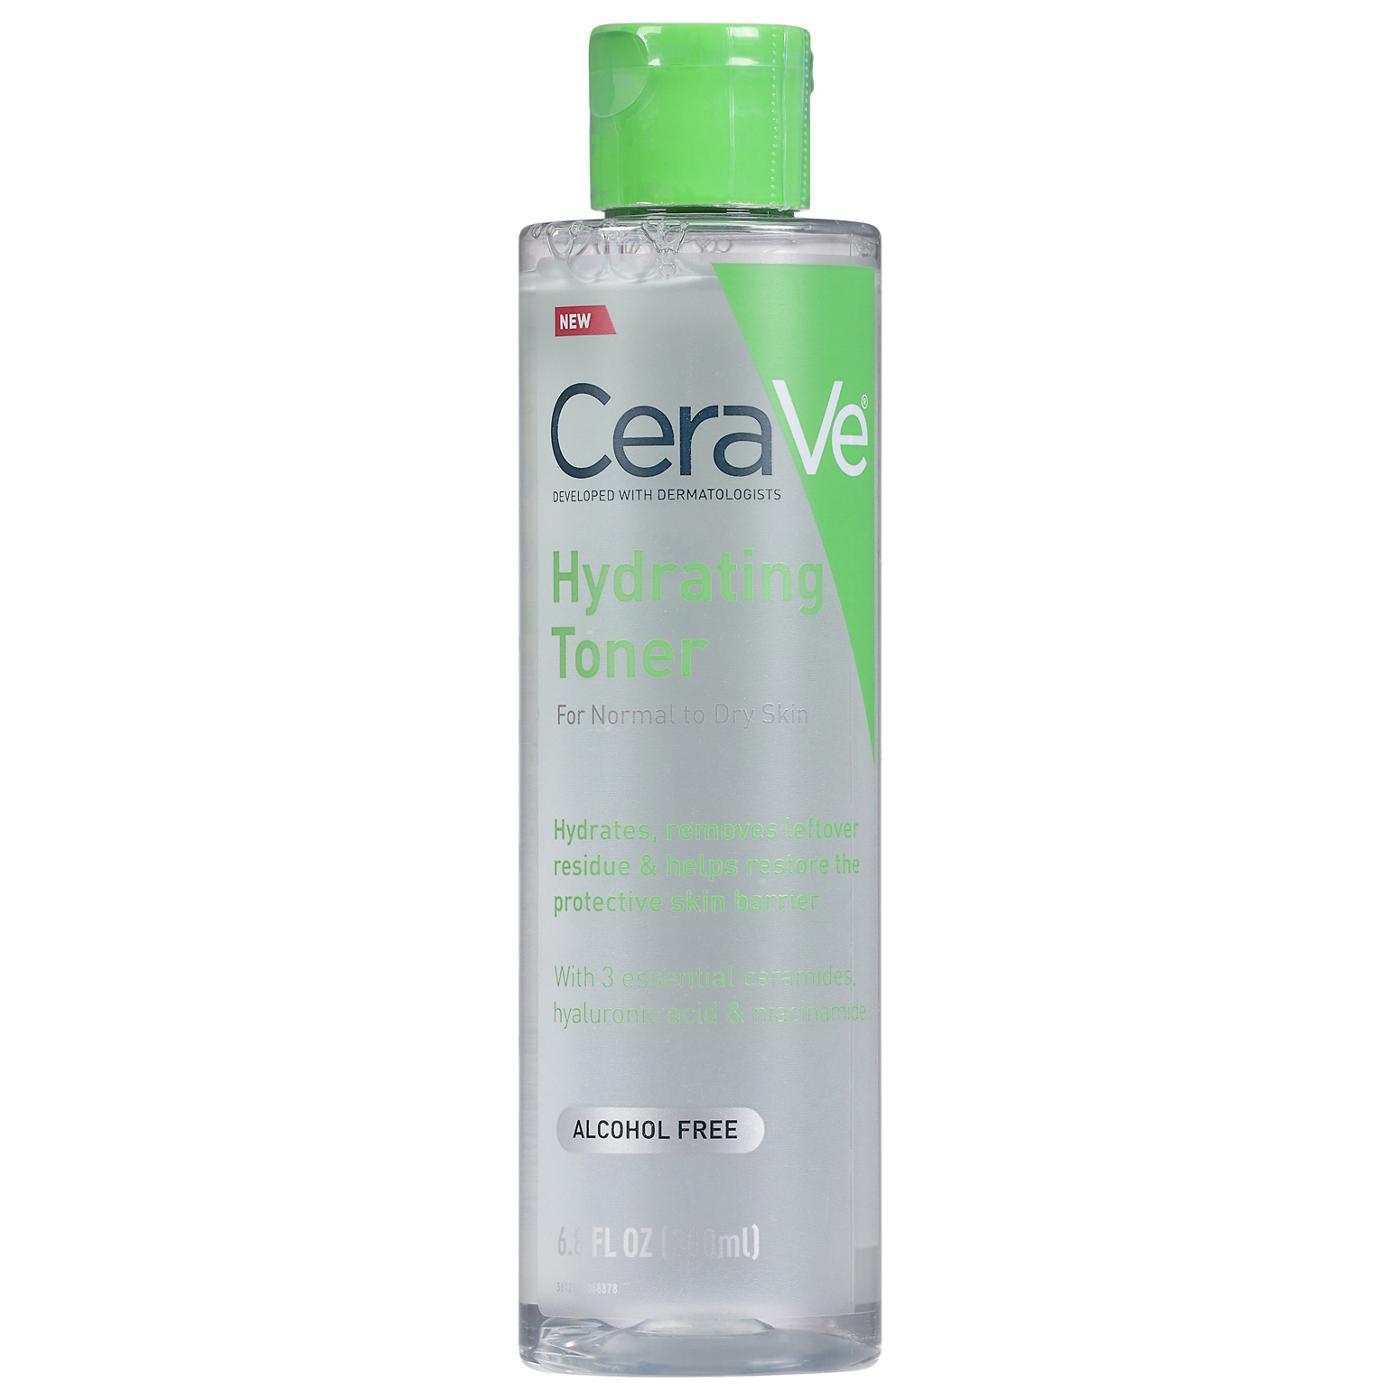 CeraVe Hydrating Toner; image 1 of 3